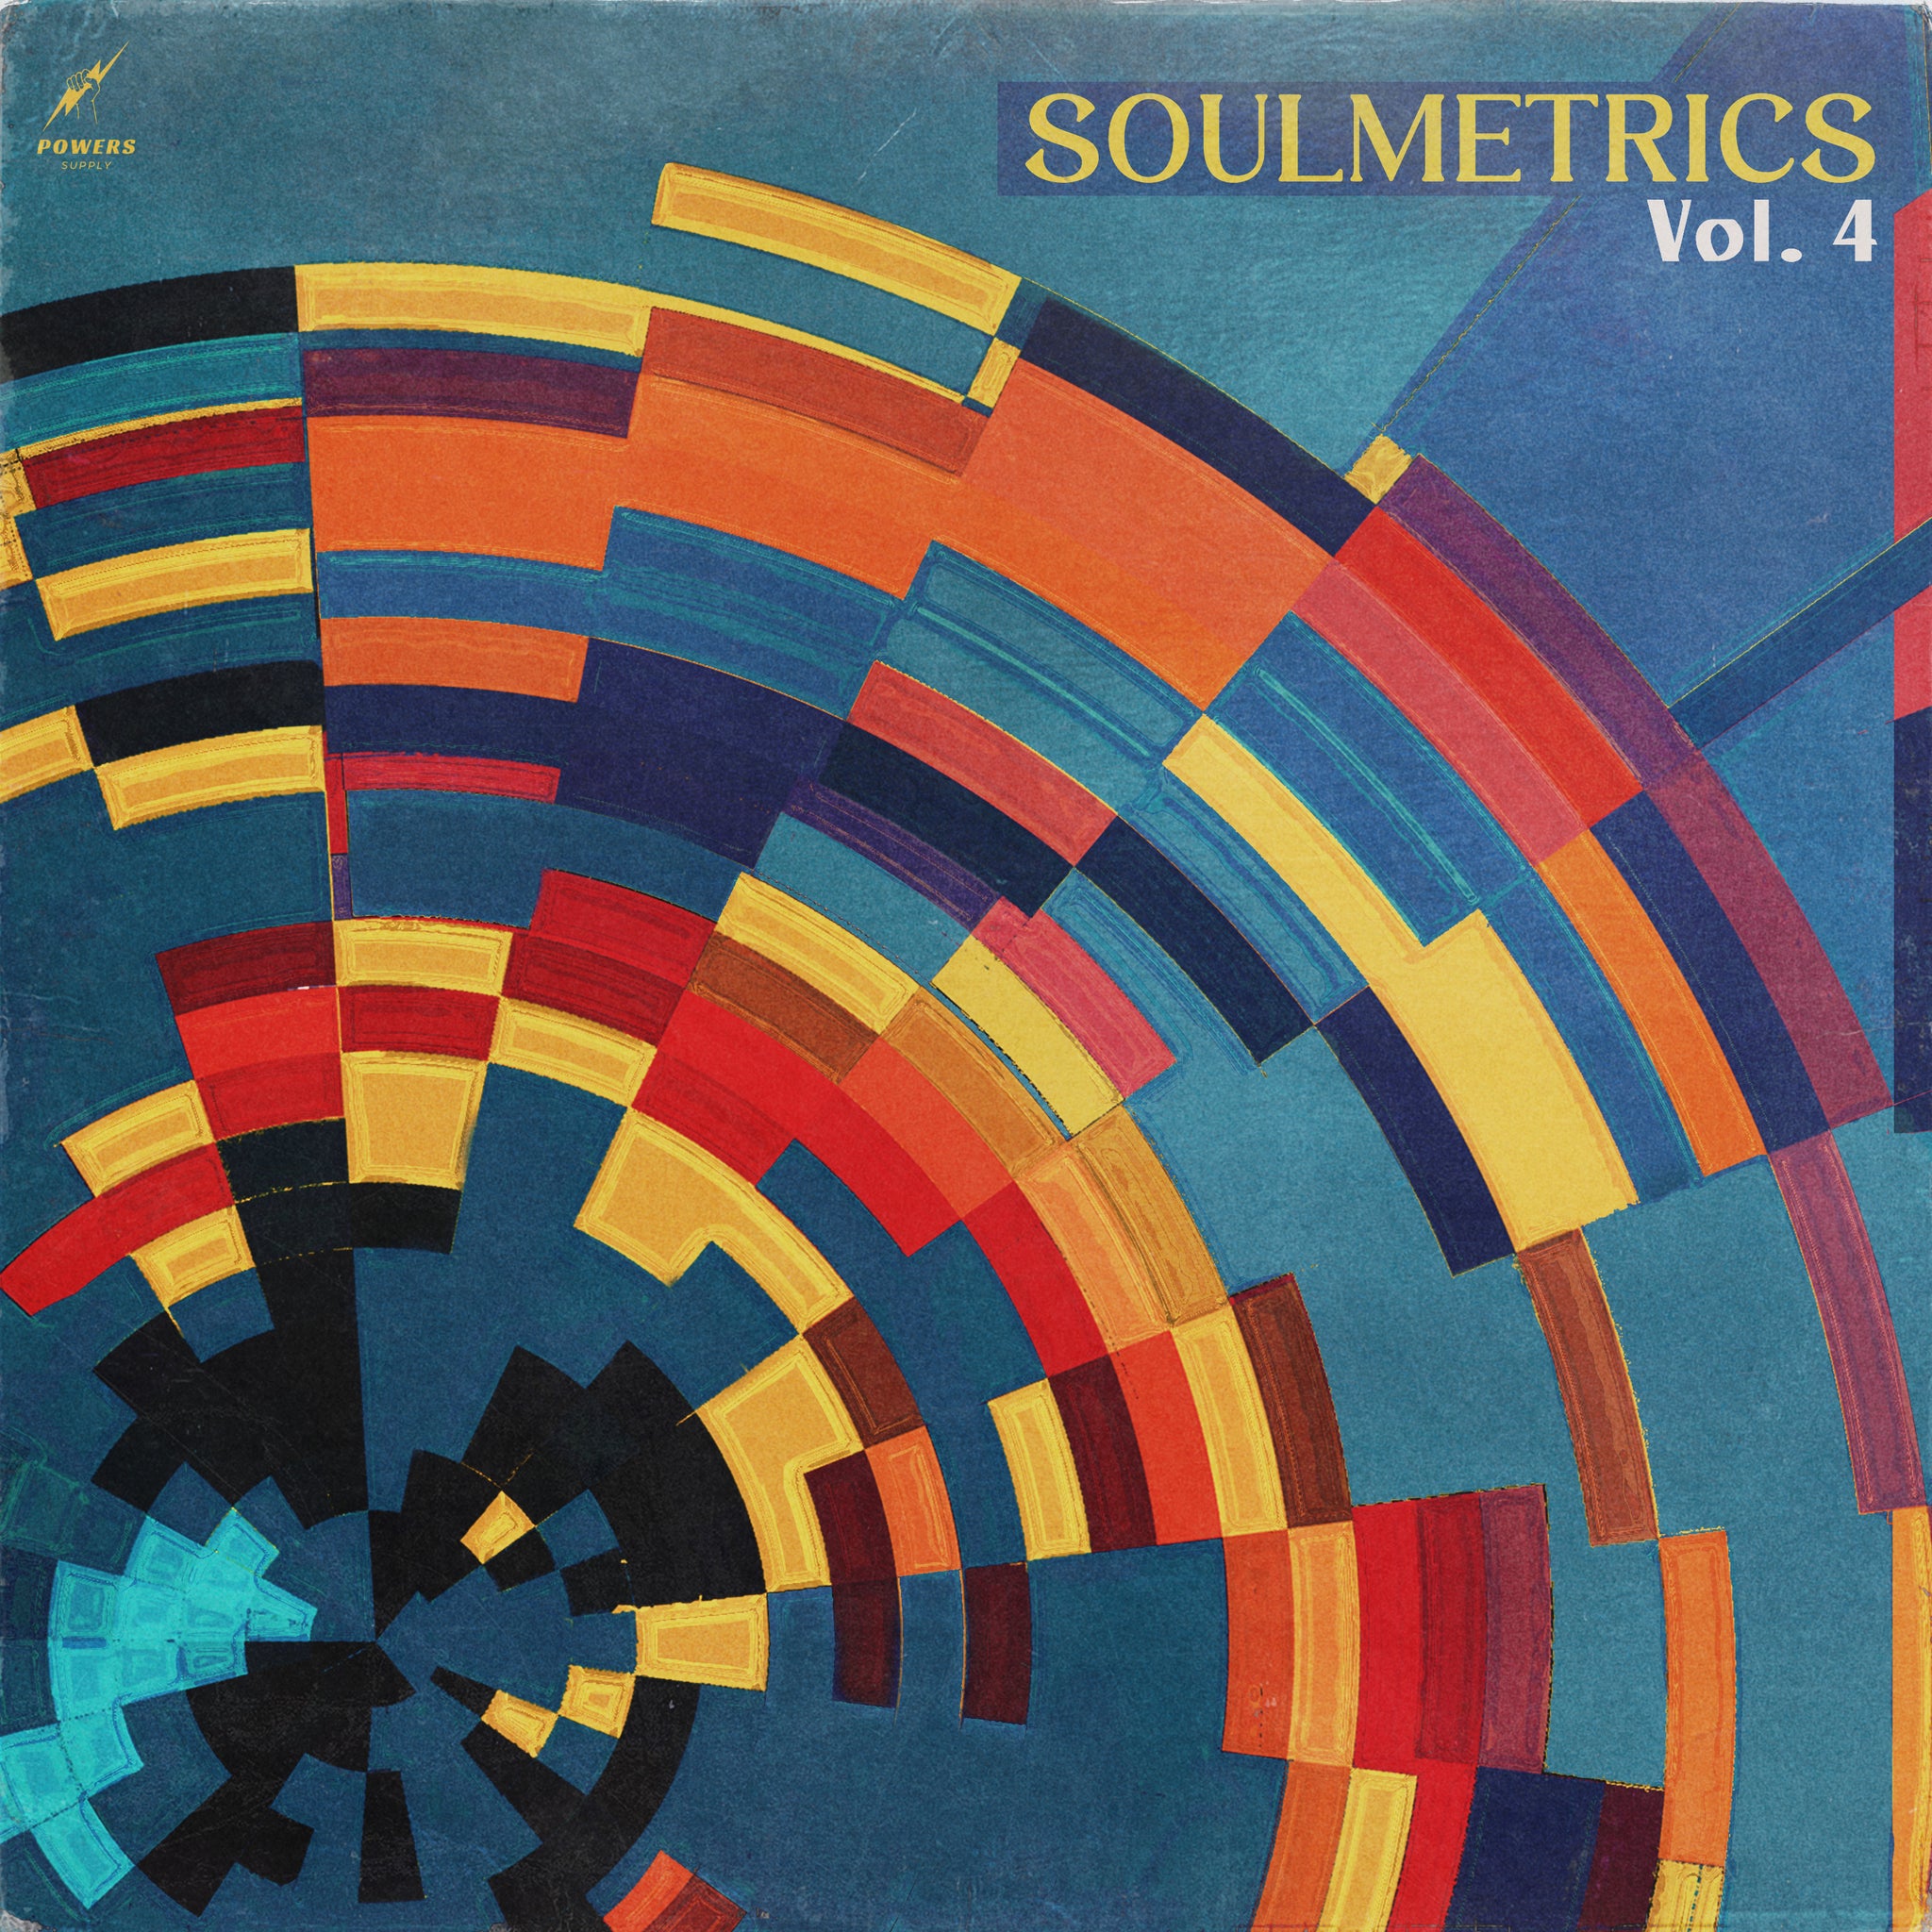 Soulmetrics Vol. 4